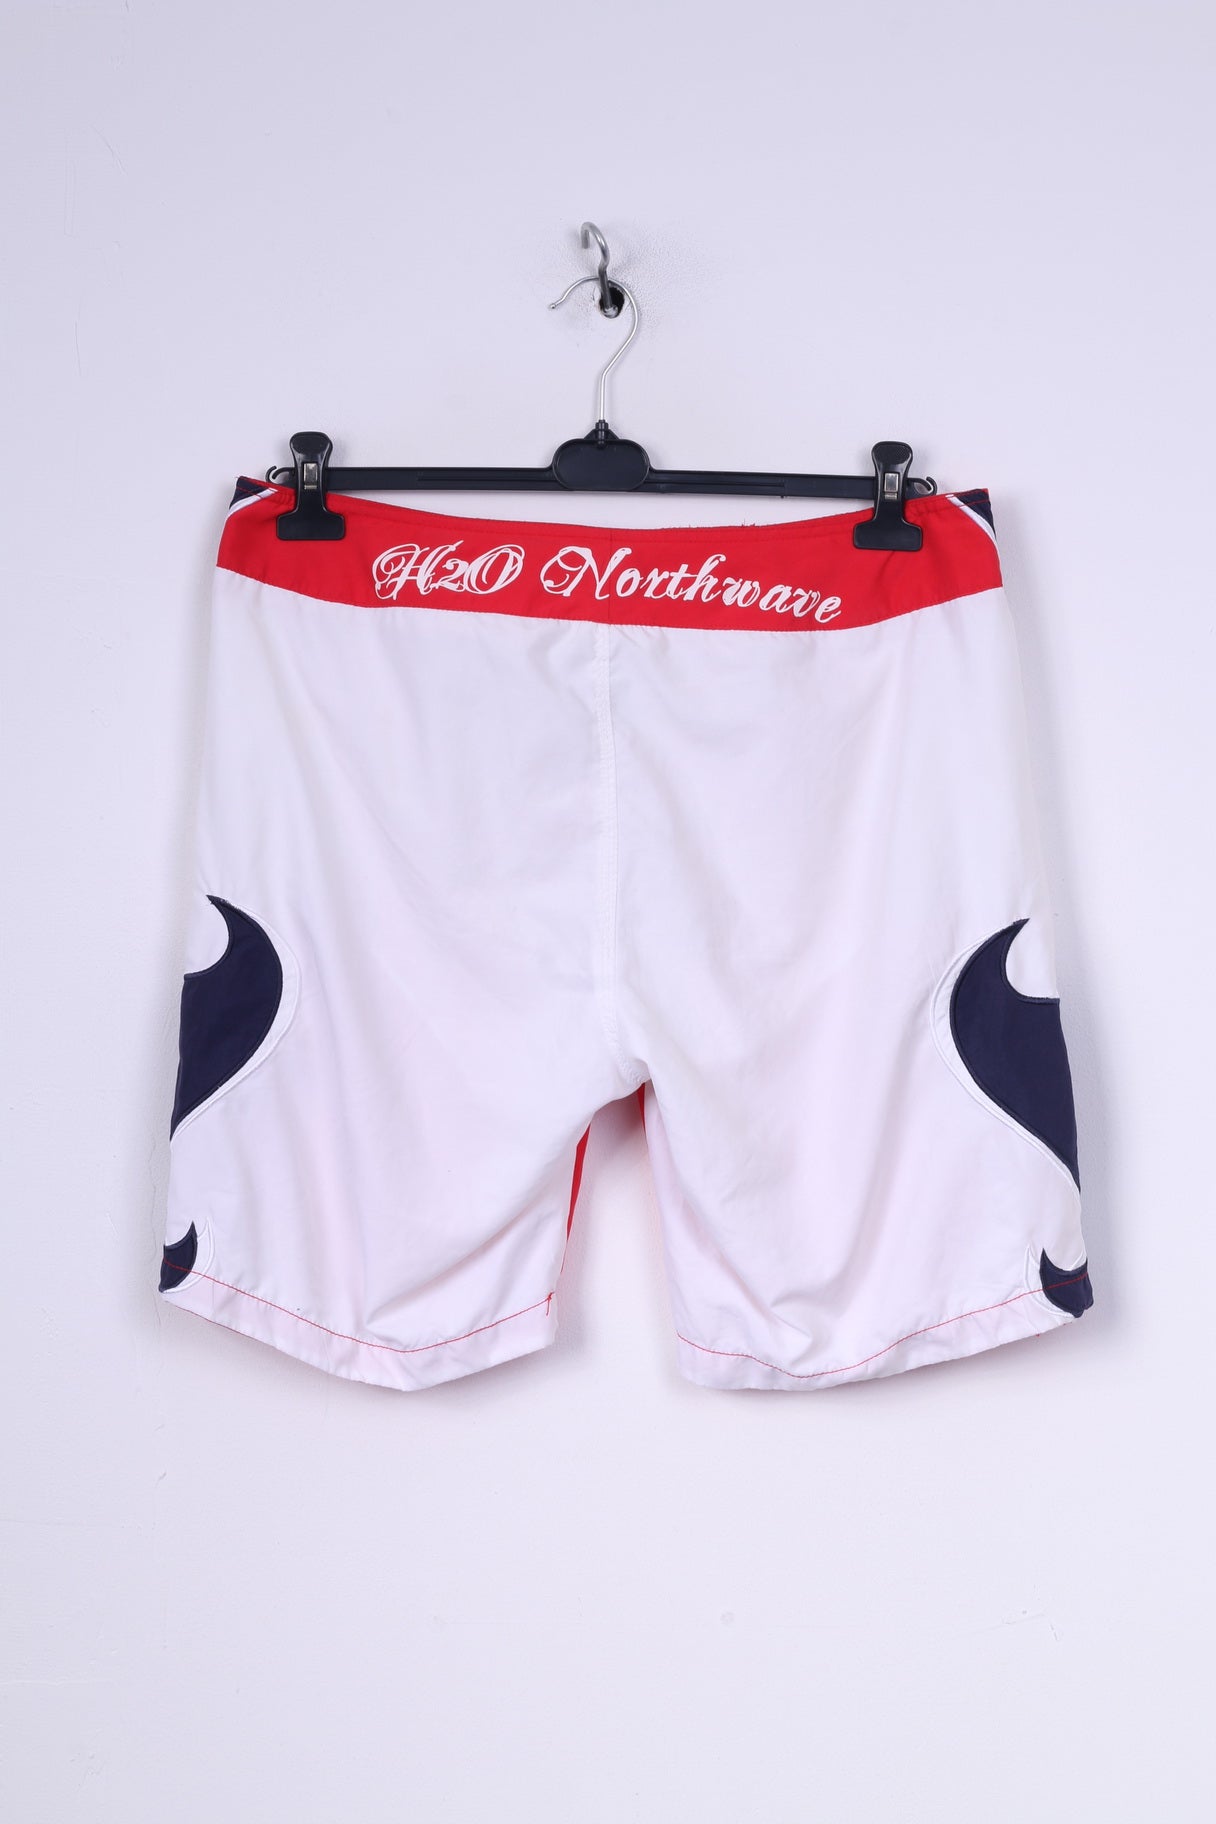 H2O Mens L Shorts Swimpants Red Sportswear Mesh Lined